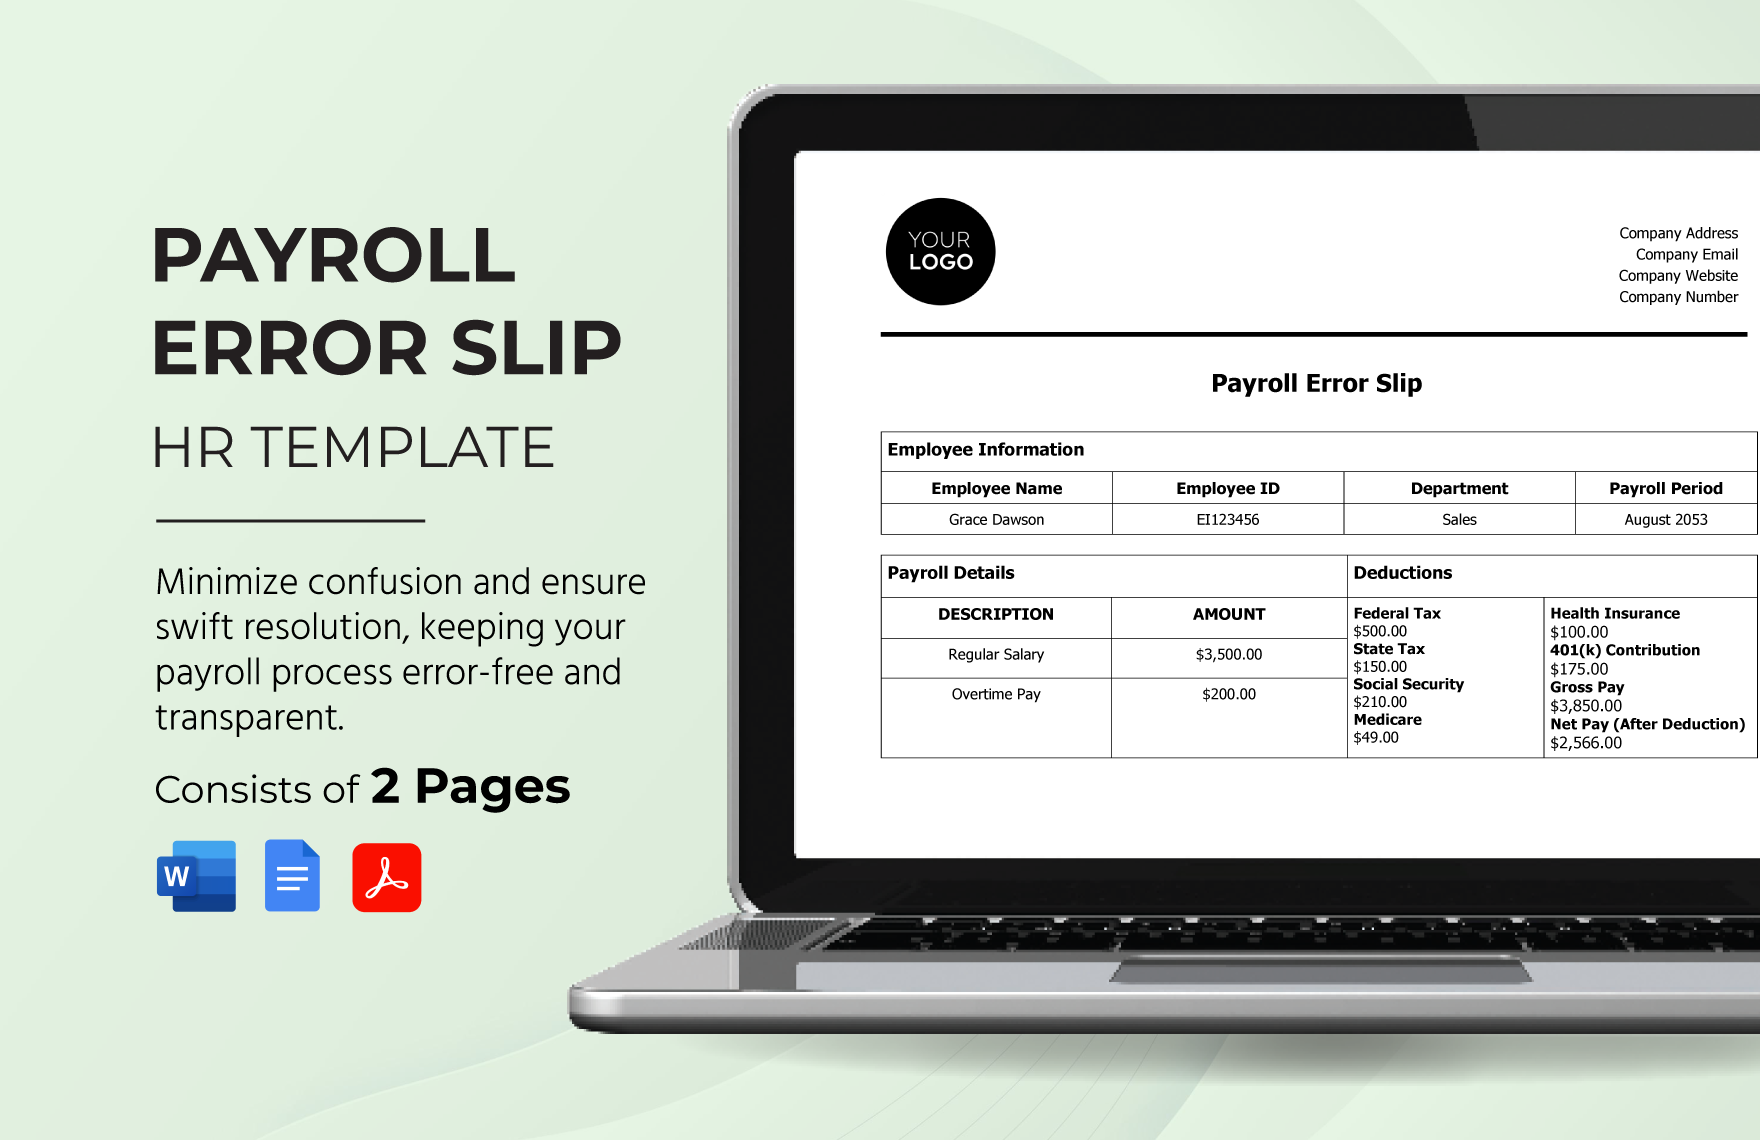 Payroll Error Slip HR Template